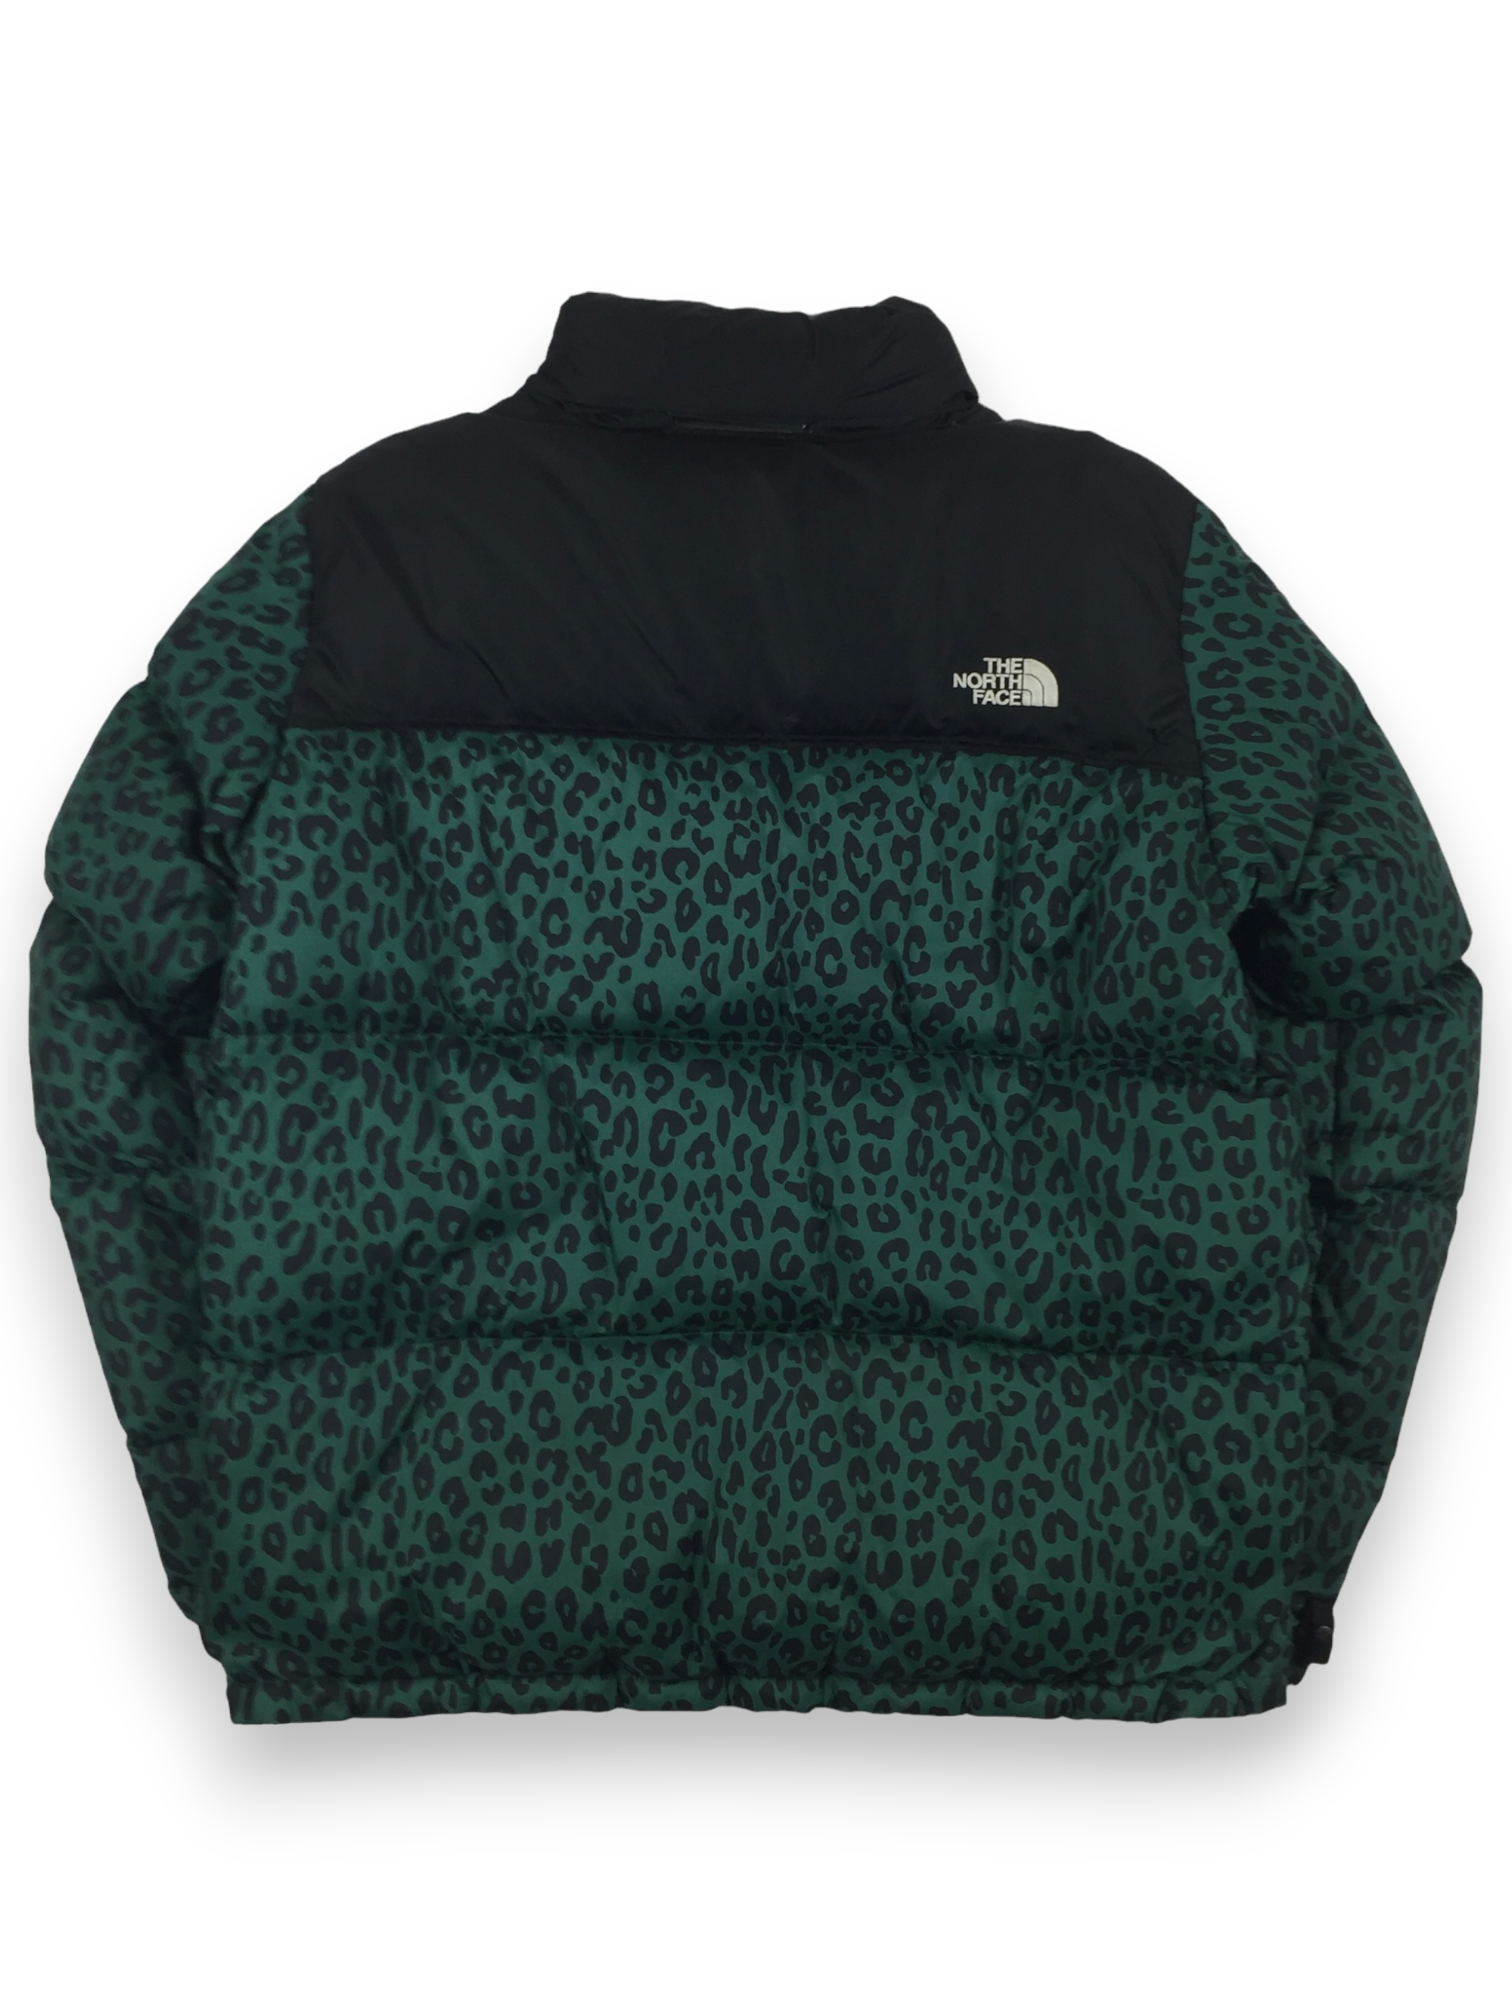 2011 Supreme x The North Face Green Leopard